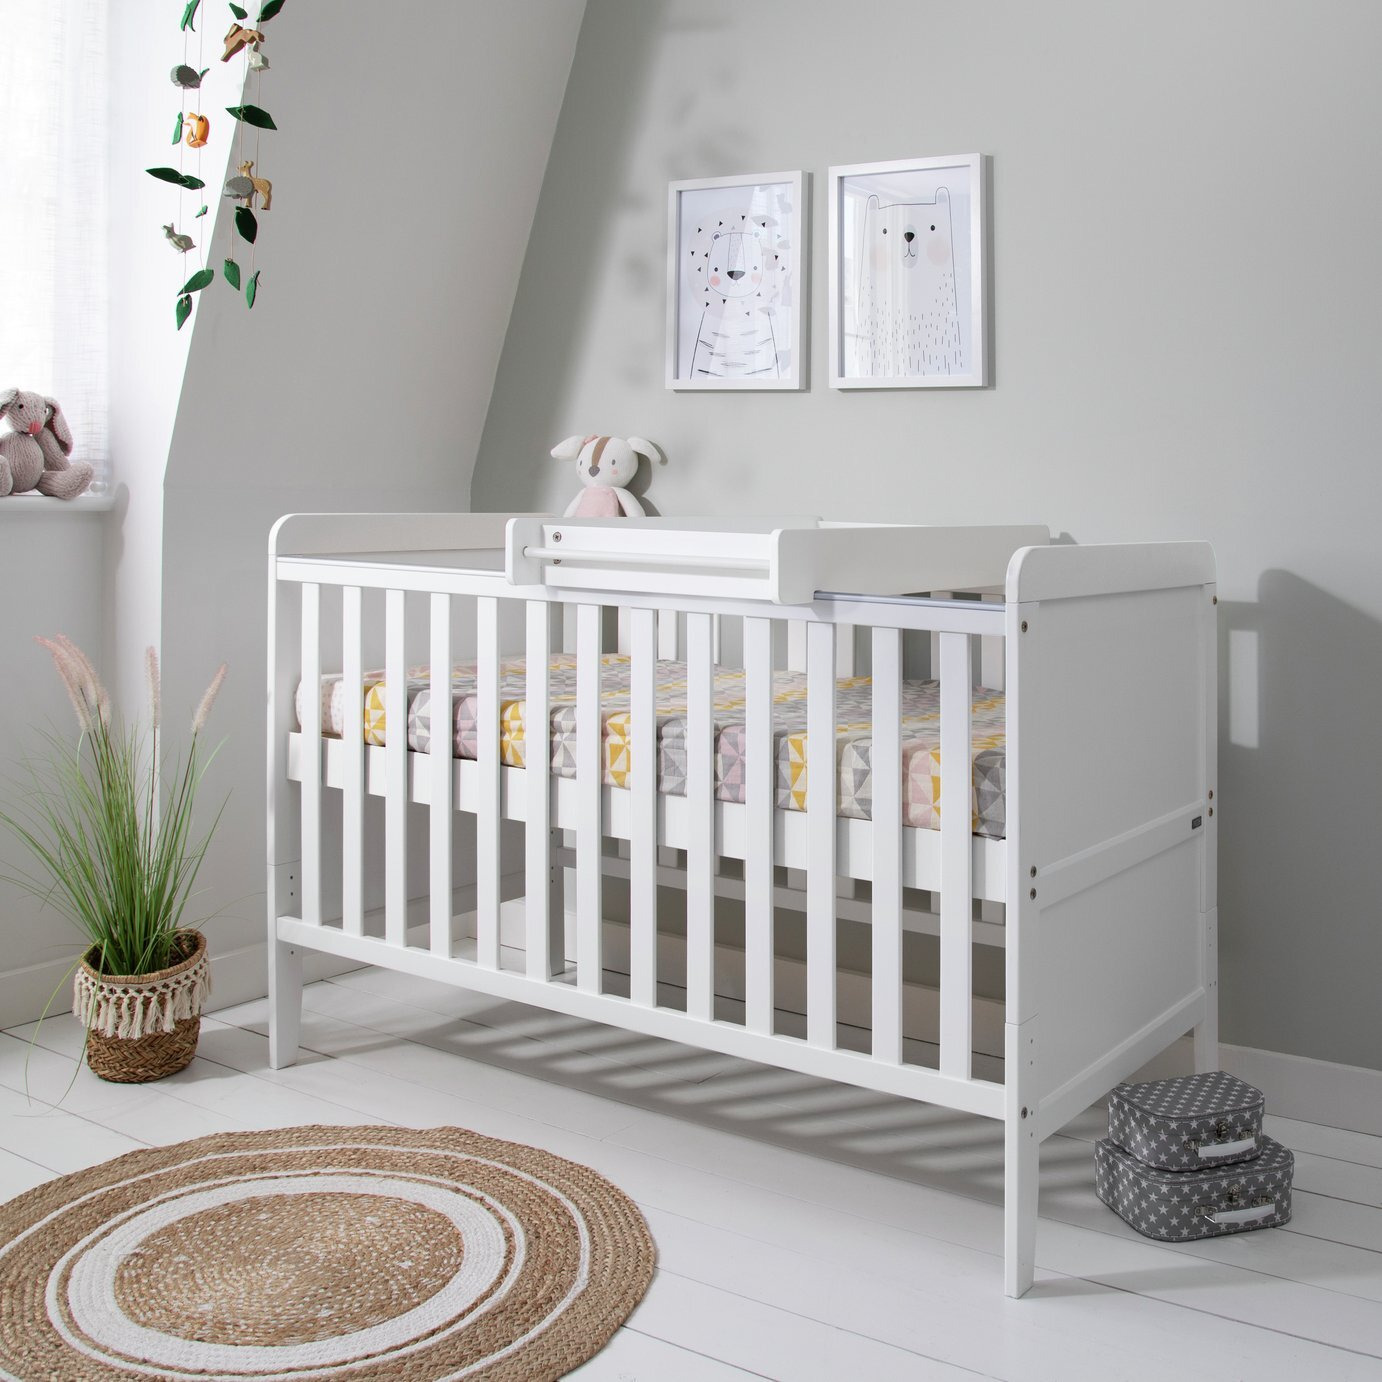 Tutti Bambini Rio Cot Bed and Dresser Nursery Set - White - image 1